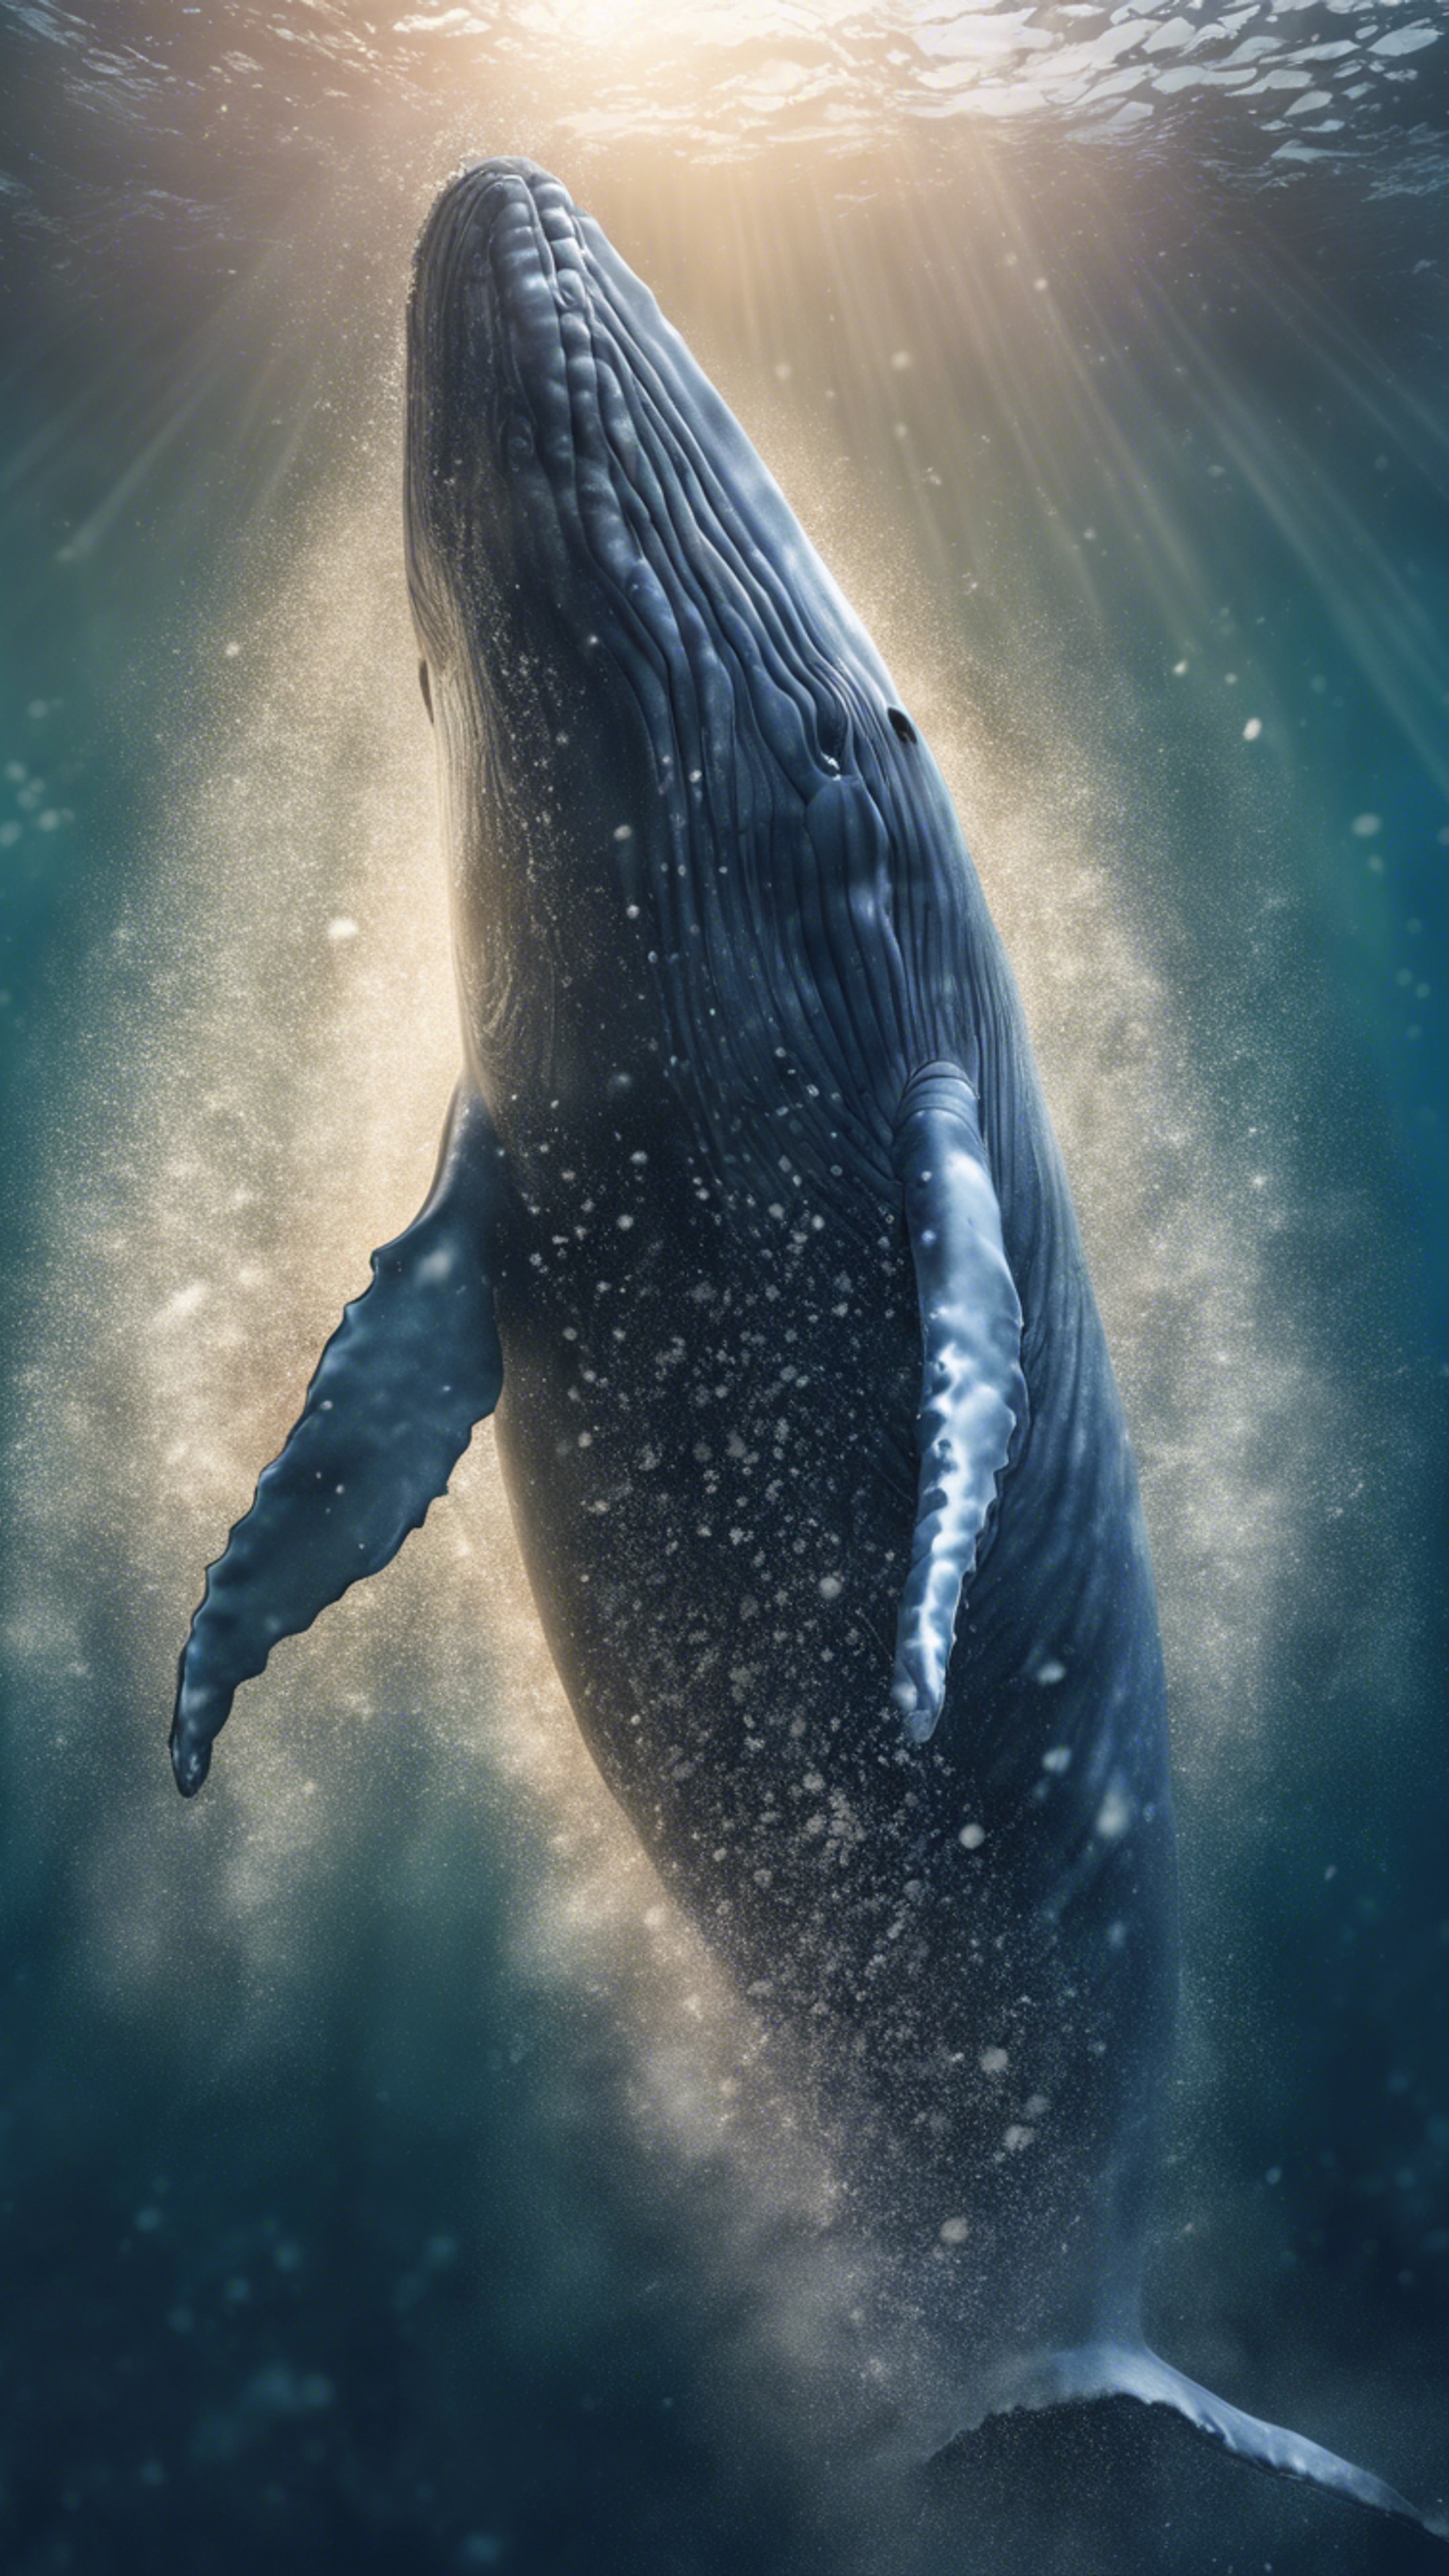 A digital portrait of a majestic sperm whale deep below the ocean waves. Tapet[e5d10afbe32a416ca5b5]